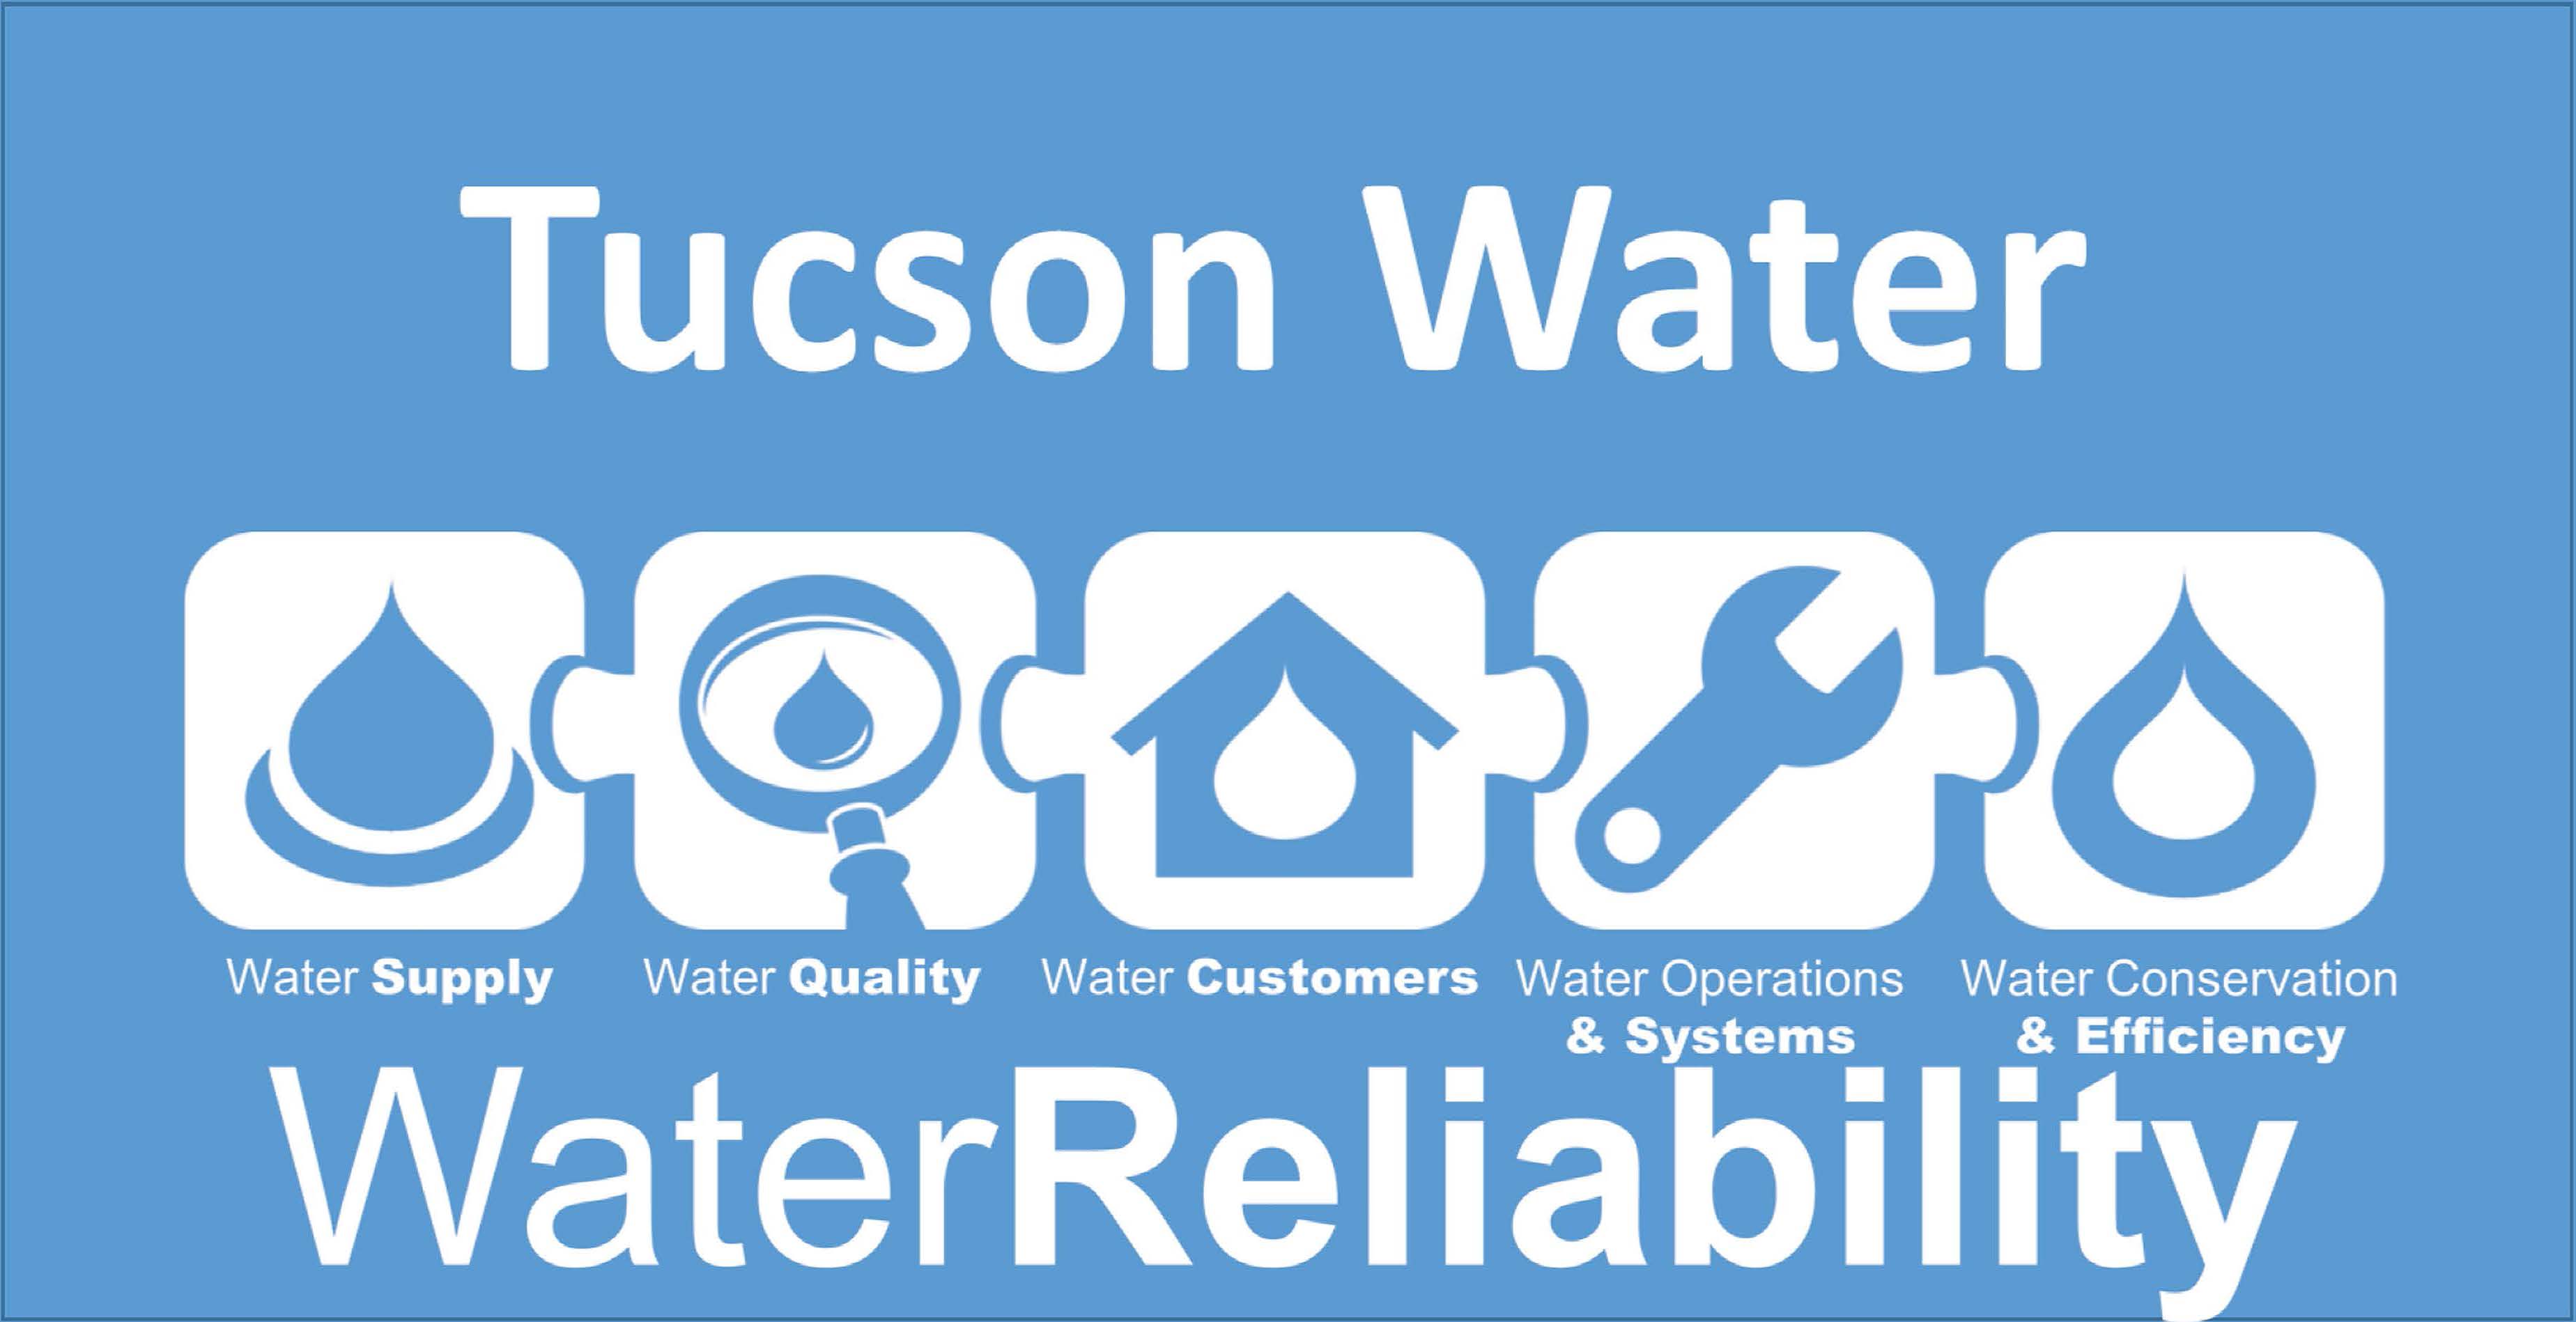 Tucson water